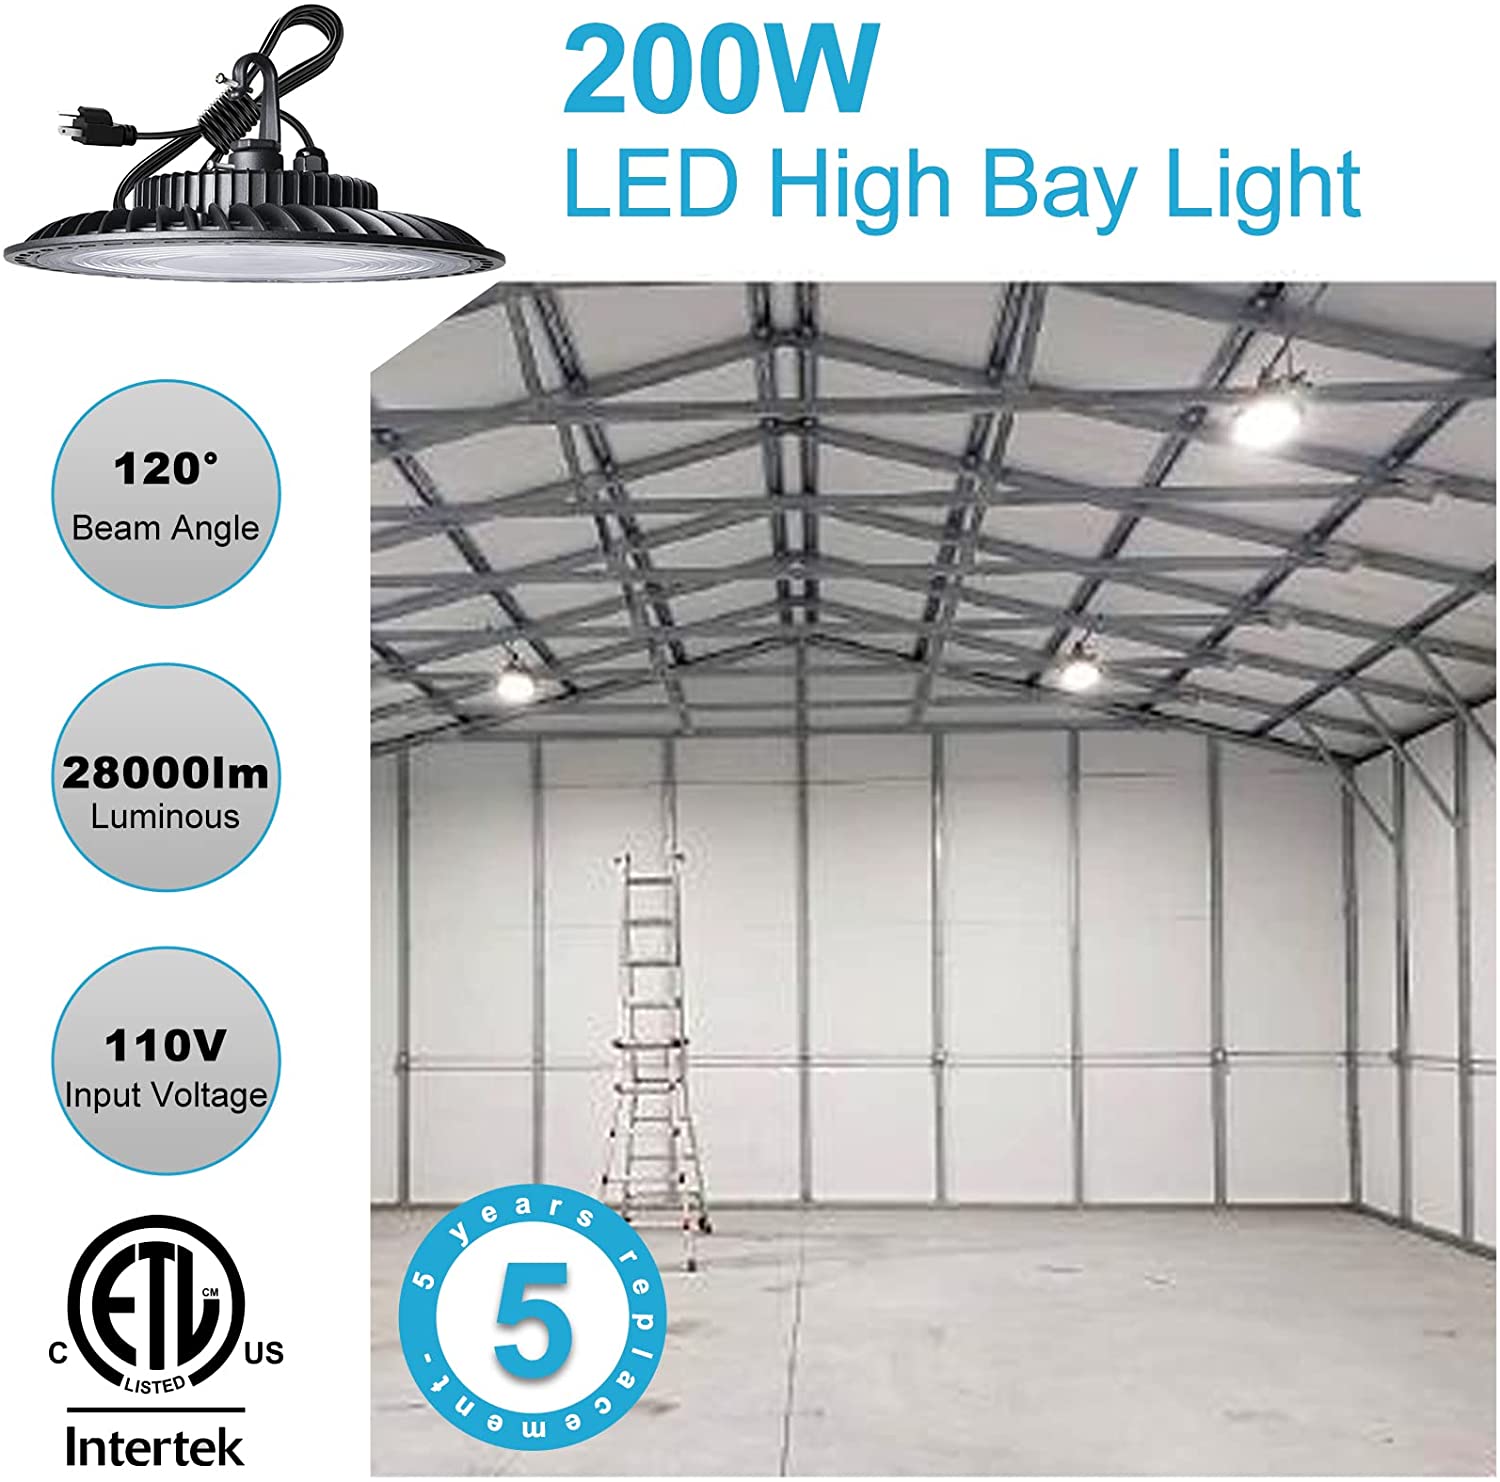 Lightdot 200W LED High Bay Light